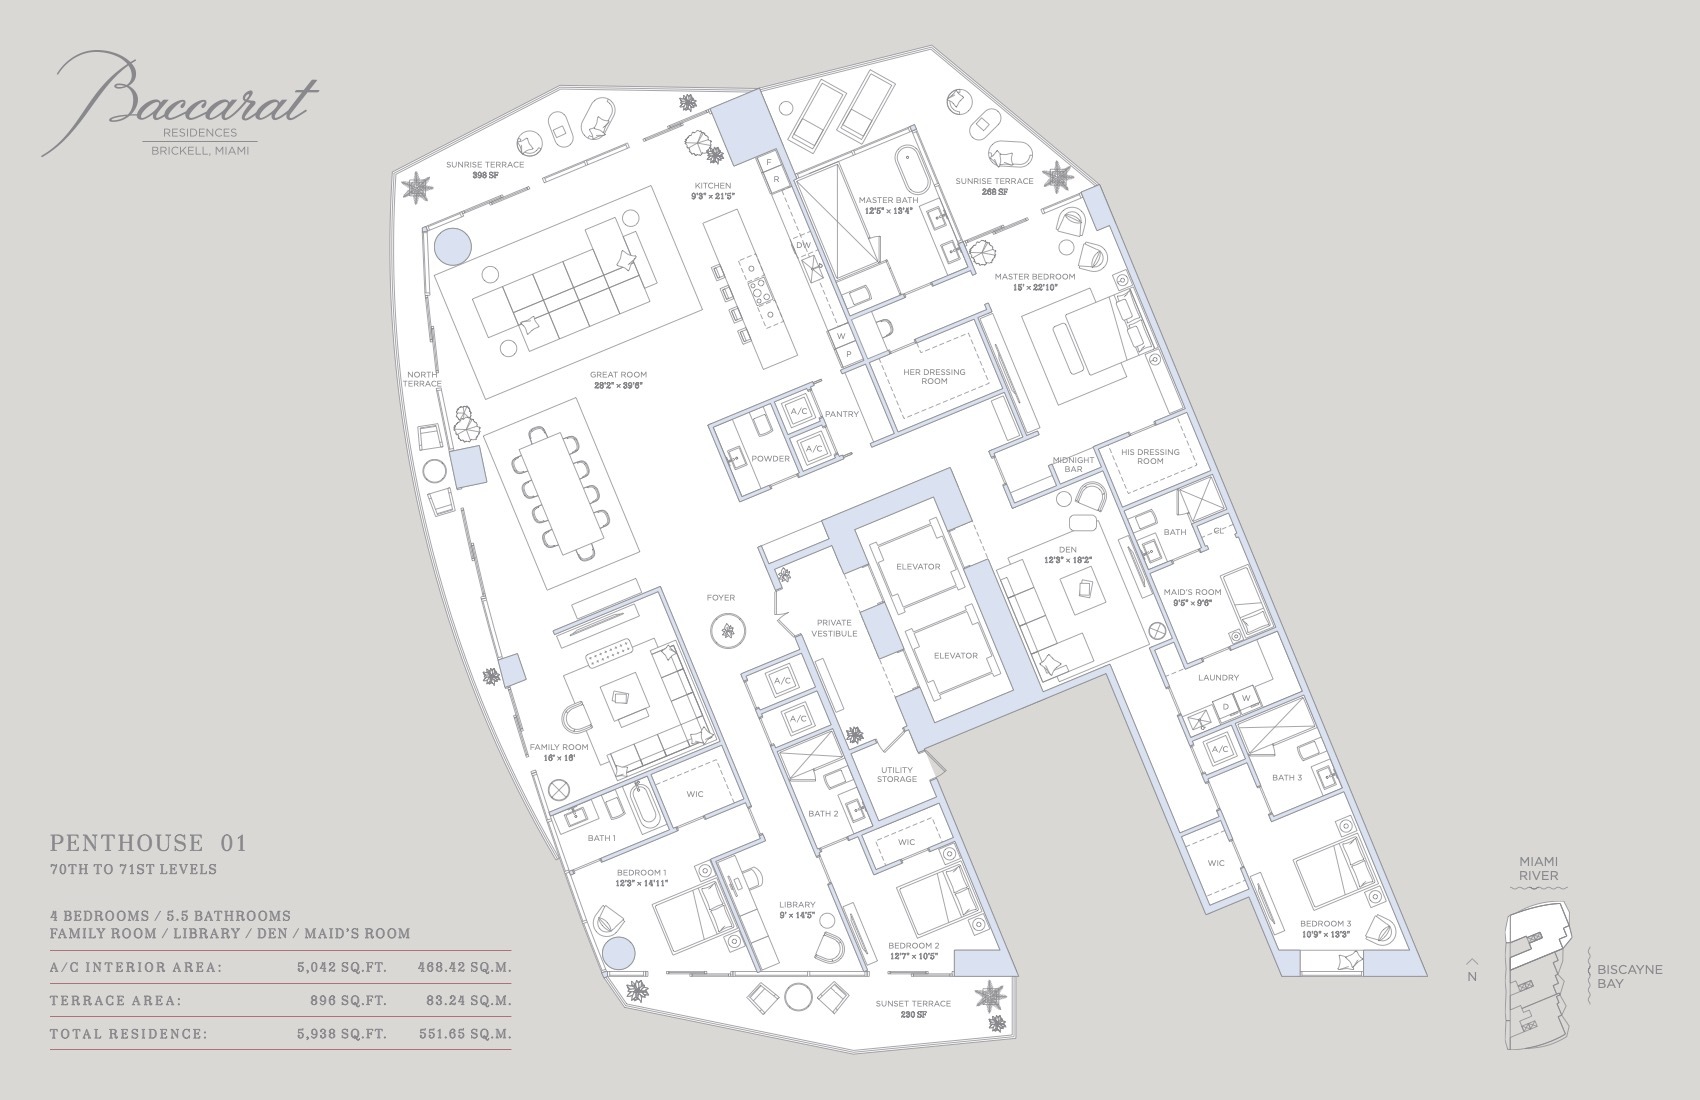 Floor Plan for Baccarat Brickell Floorplans, Penthouse 01